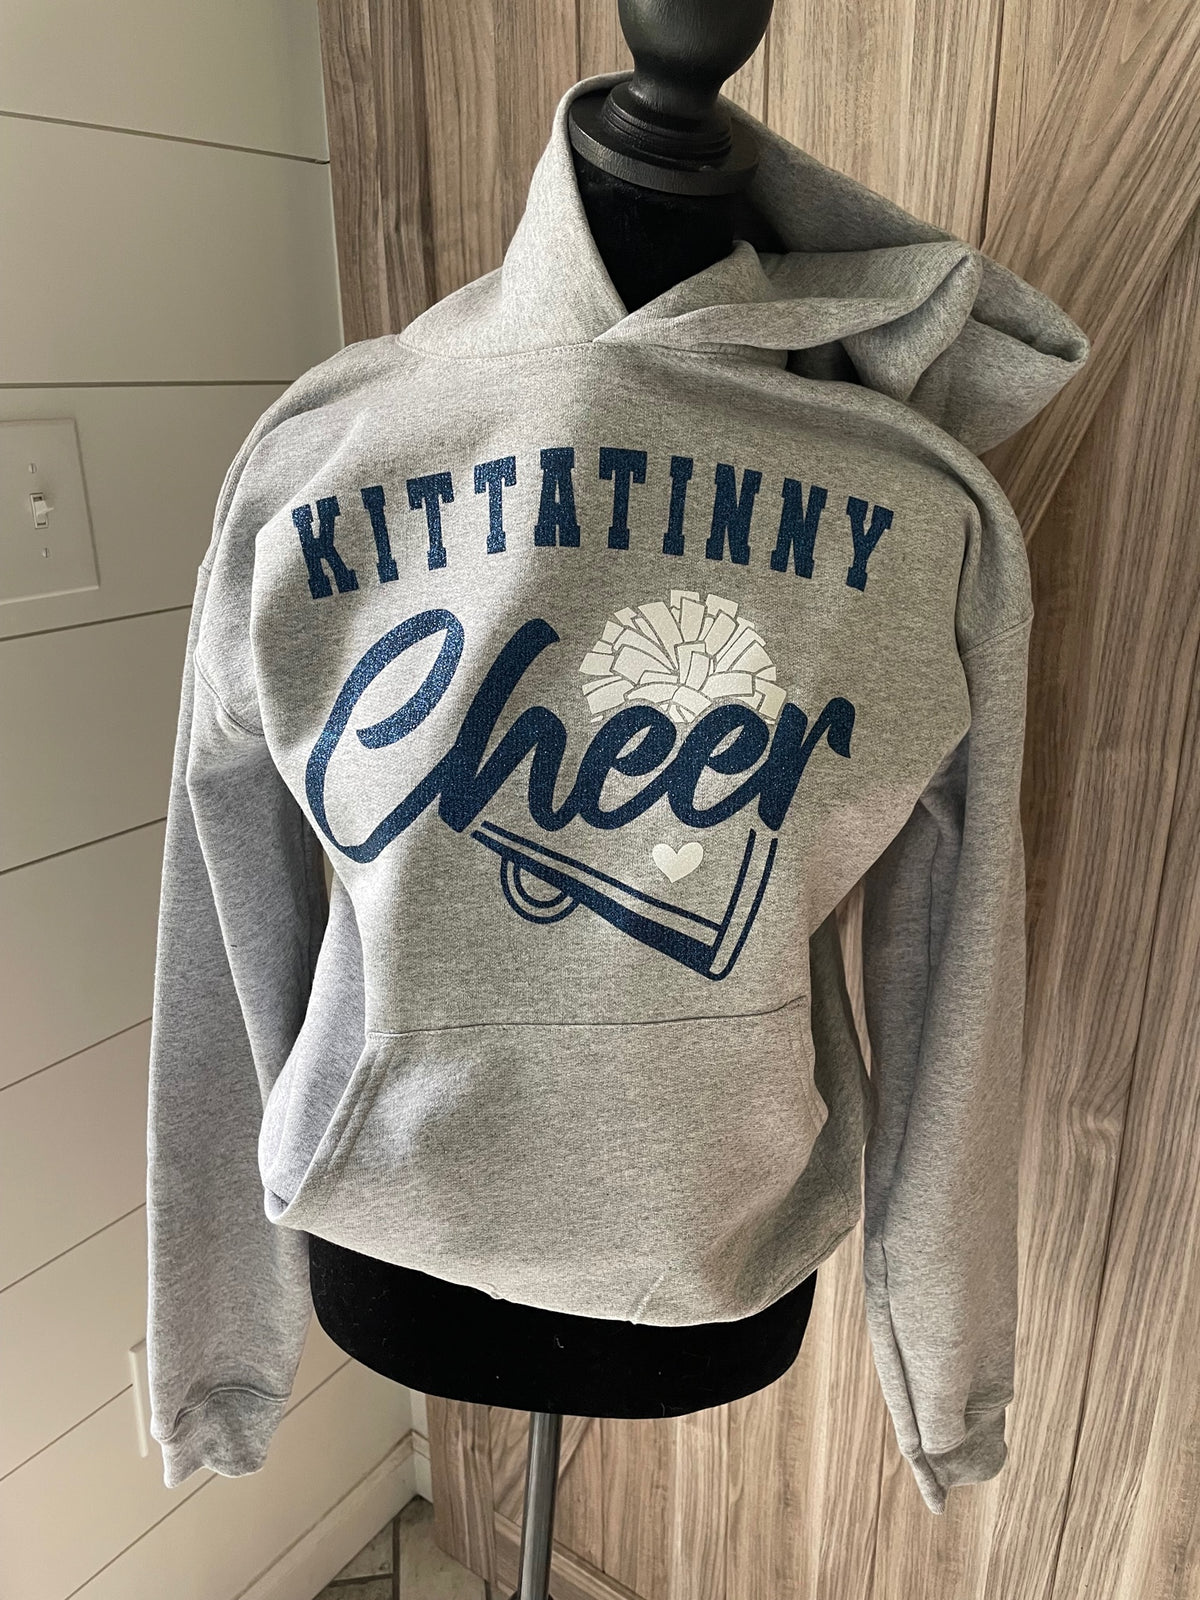 Kittatinny Cheer GLITTER Design 9 Hooded Sweatshirt